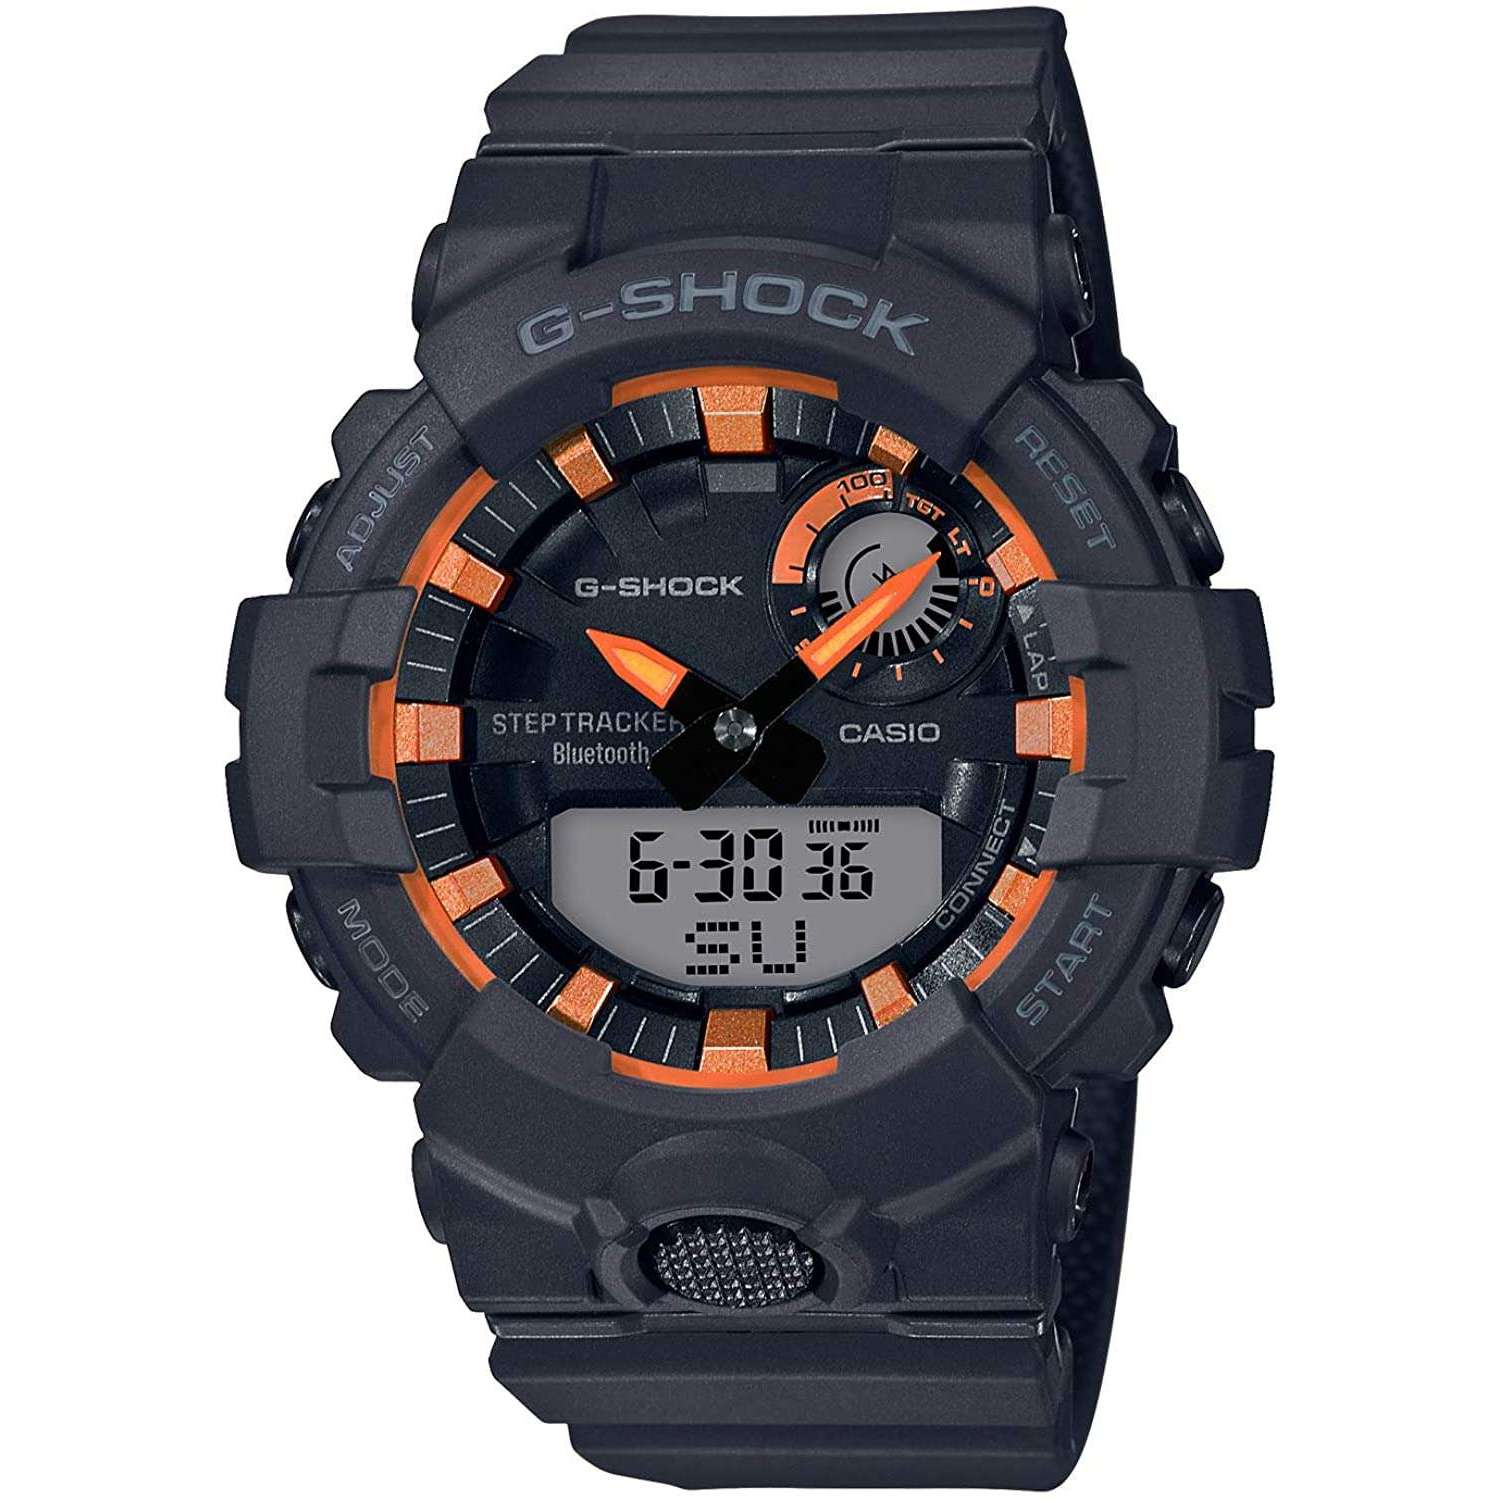 ROOK JAPAN:CASIO G-SHOCK JDM MEN WATCH GBA-800SF-1AJR,JDM Watch,Casio G-Shock